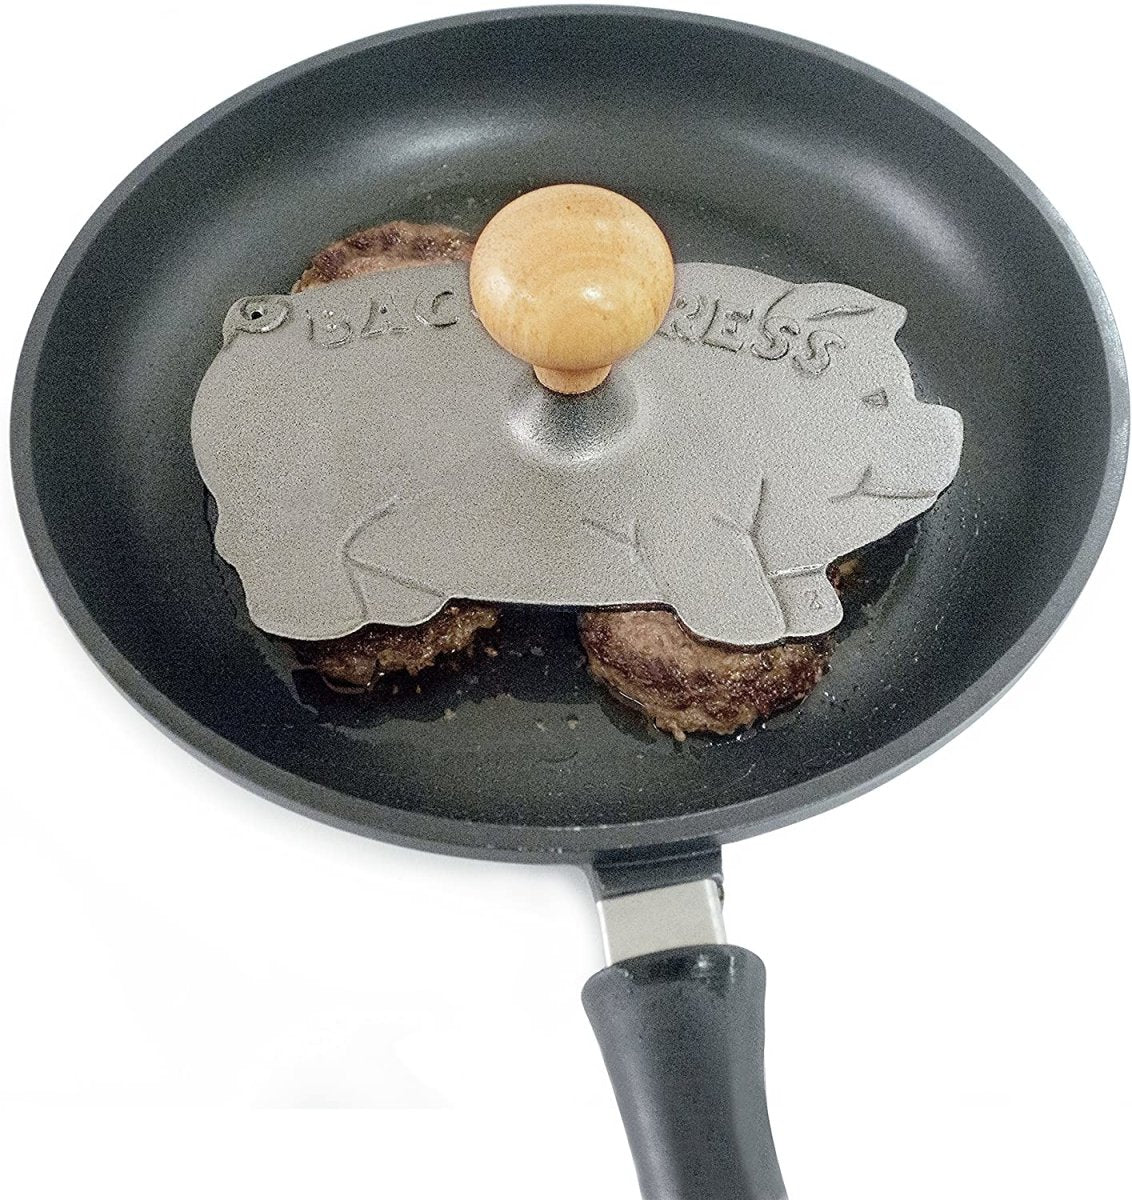 Carnivore Kitchen: LODGE Cast Iron GRILL PRESS REVIEW  The Carnivore Diet  Best Kitchen Appliances 